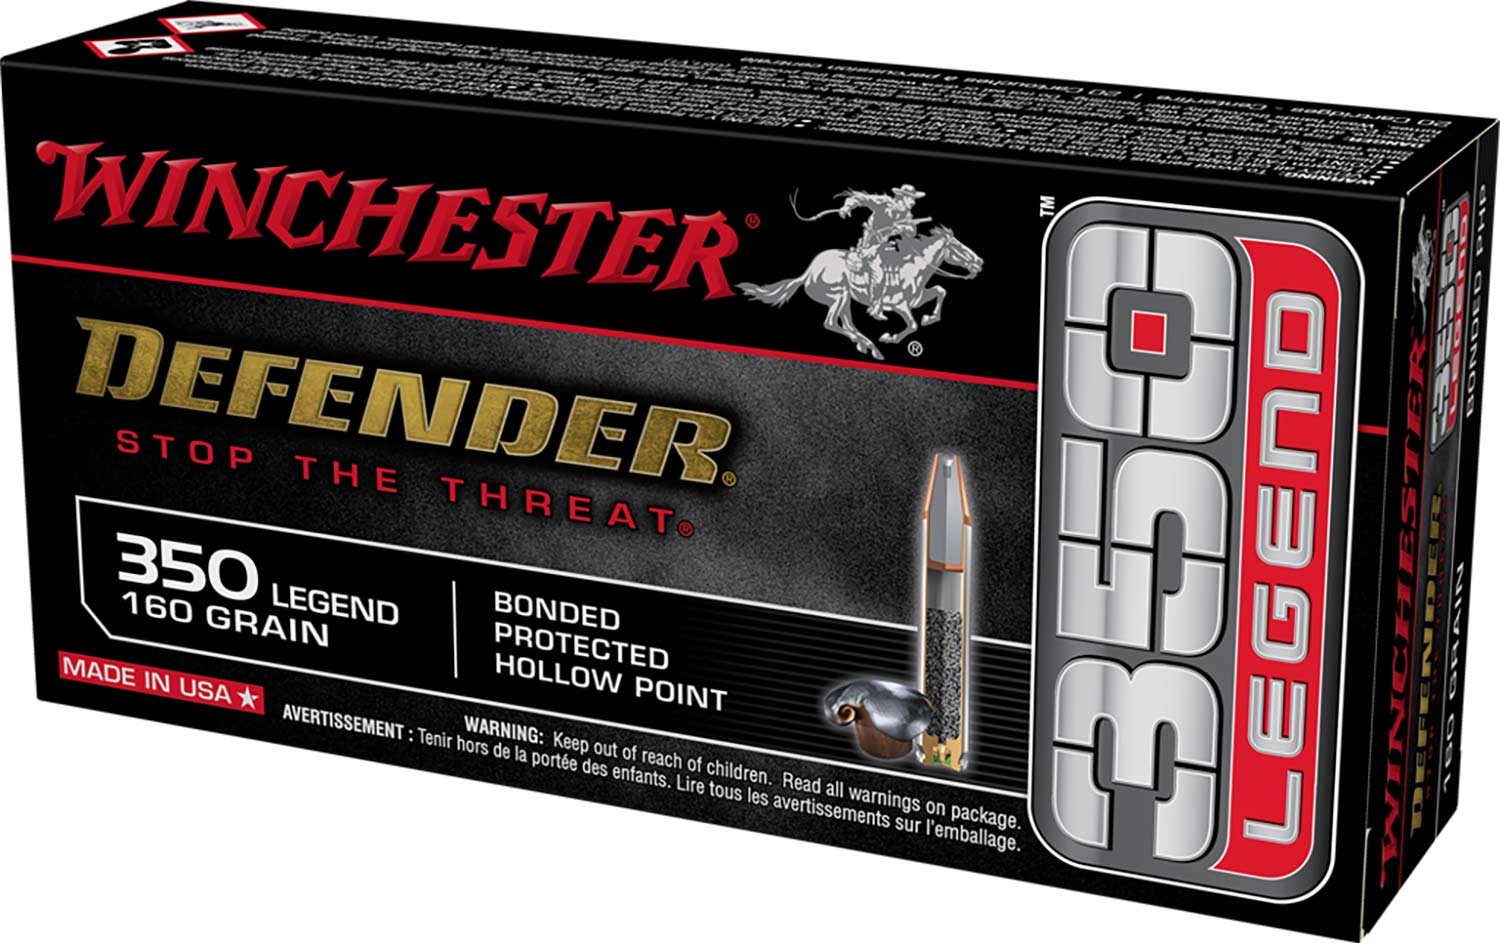 Winchester Defender 160 grain 350 Legend